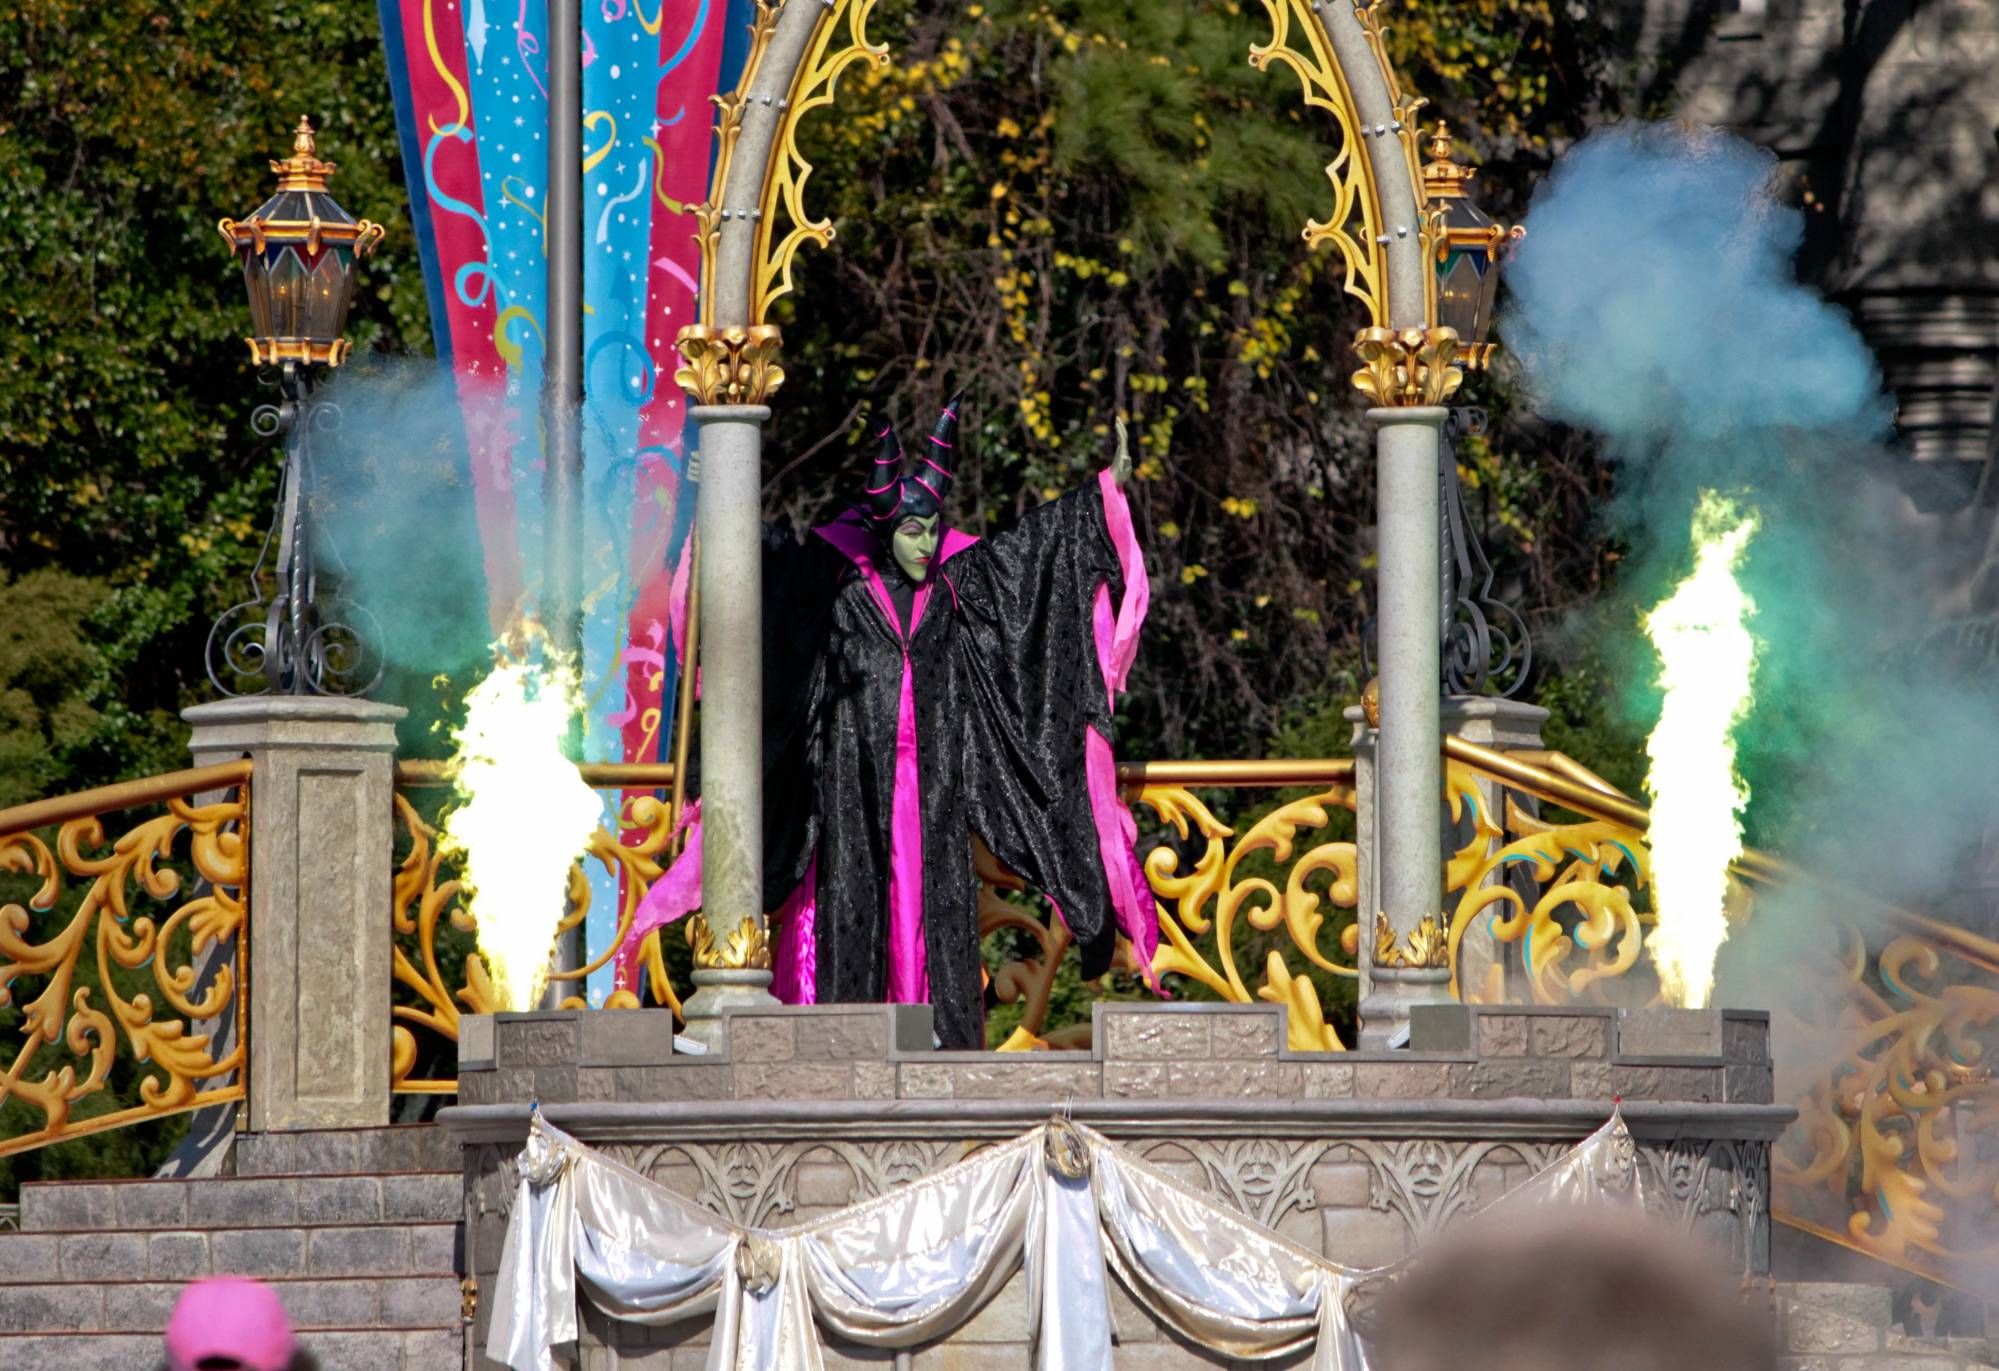 Magic Kingdom - Malificent makes her entrance